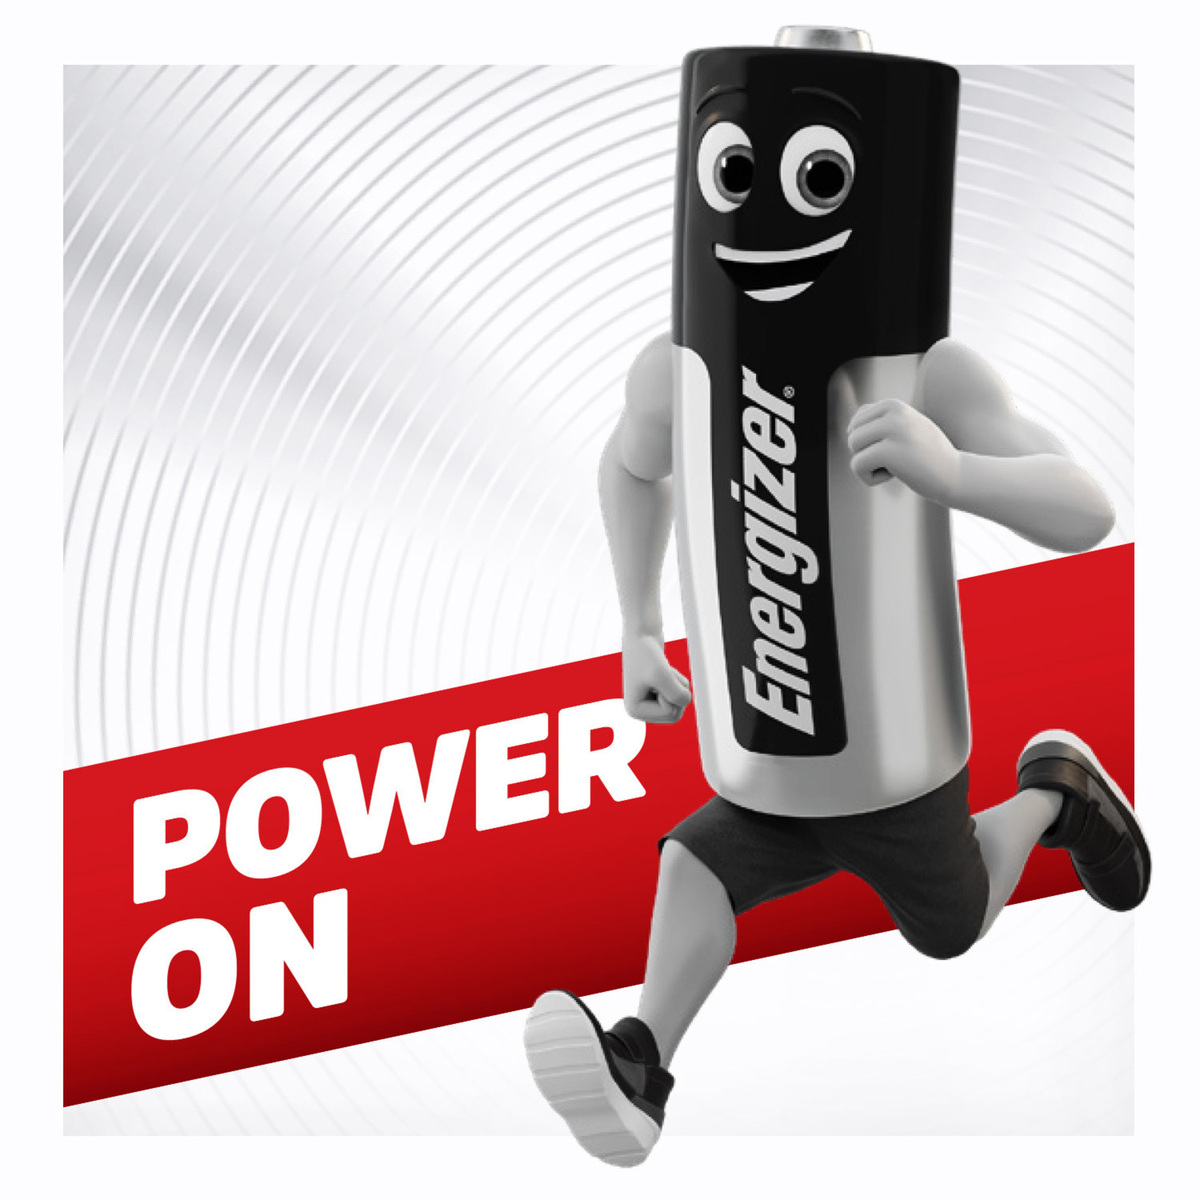 Energizer Max Alkaline AA Battery, 1.5 V, 12 Pcs, EP91BP12